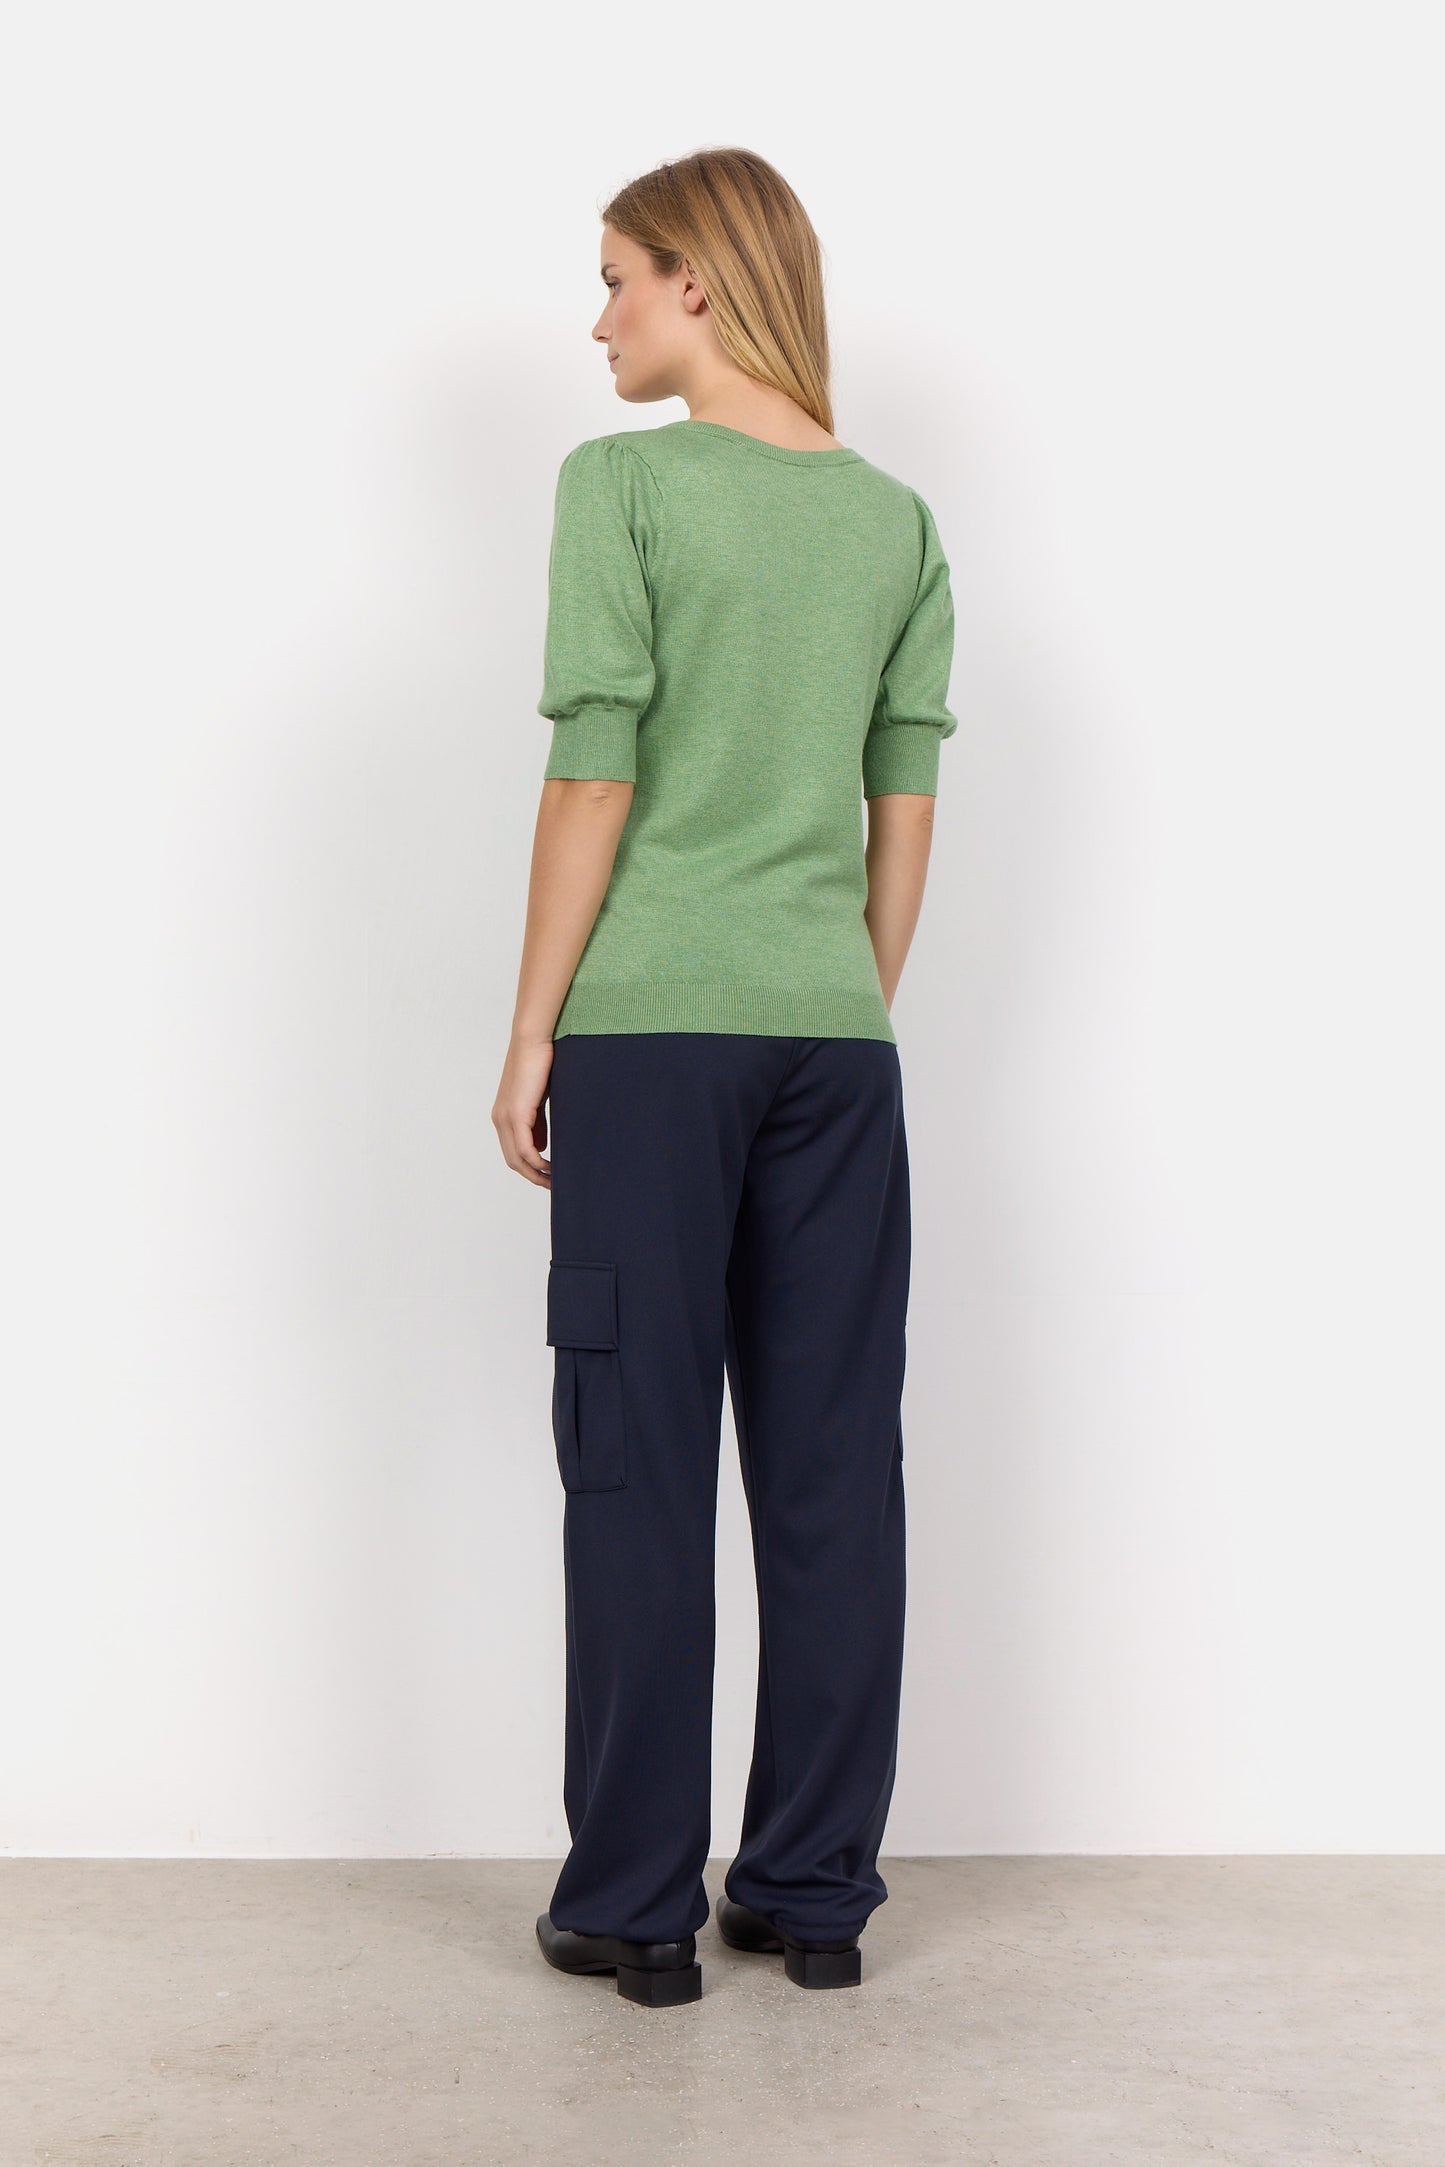 Soya Concept Green Short Sleeve Dollie Pullover